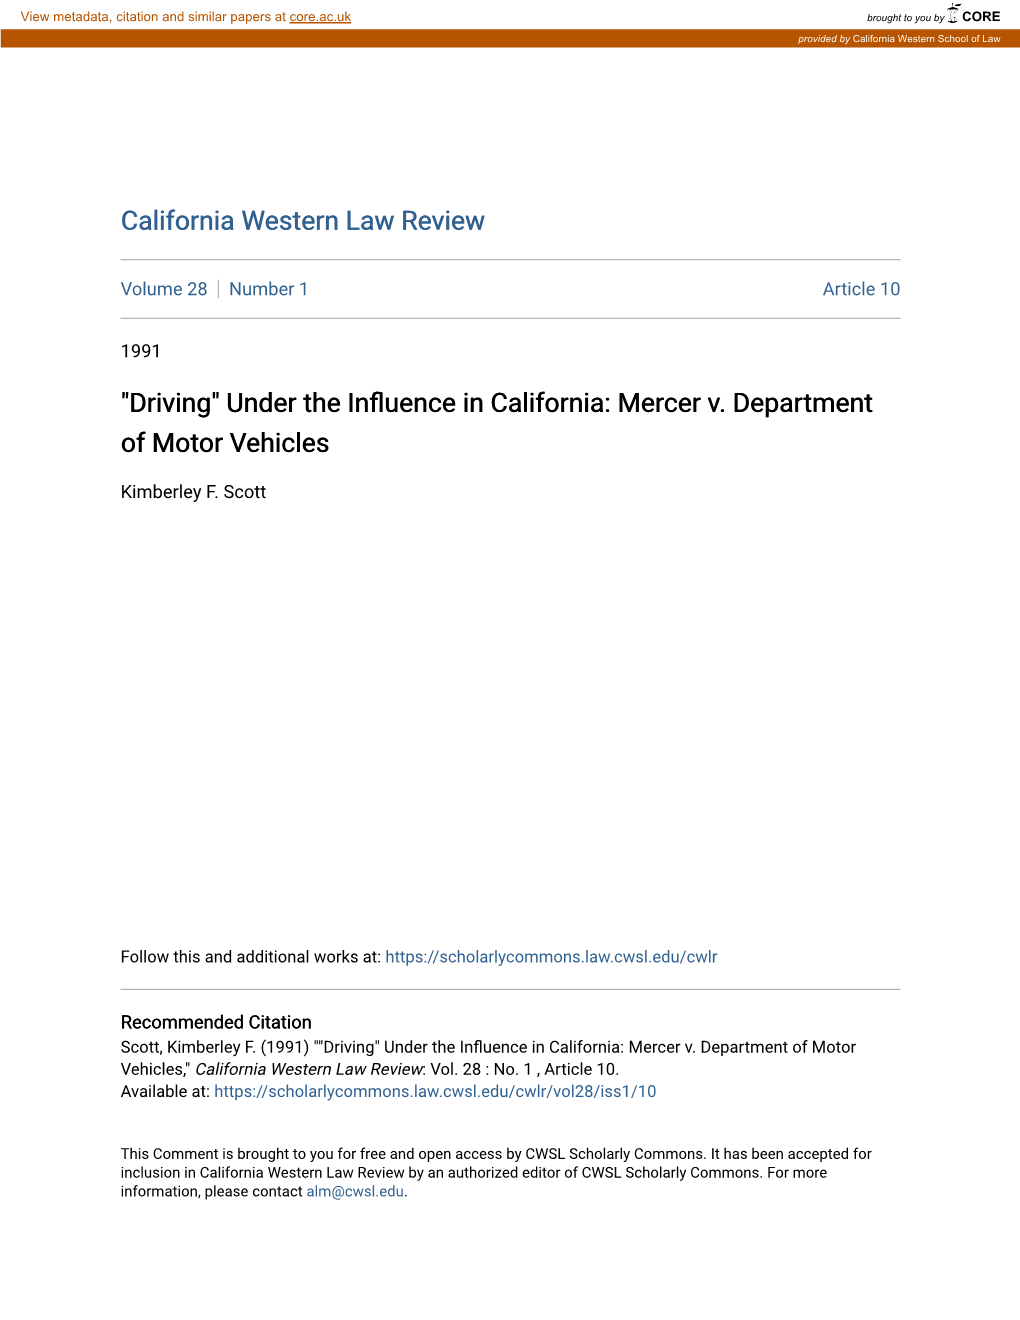 "Driving" Under the Influence in California: Mercer V